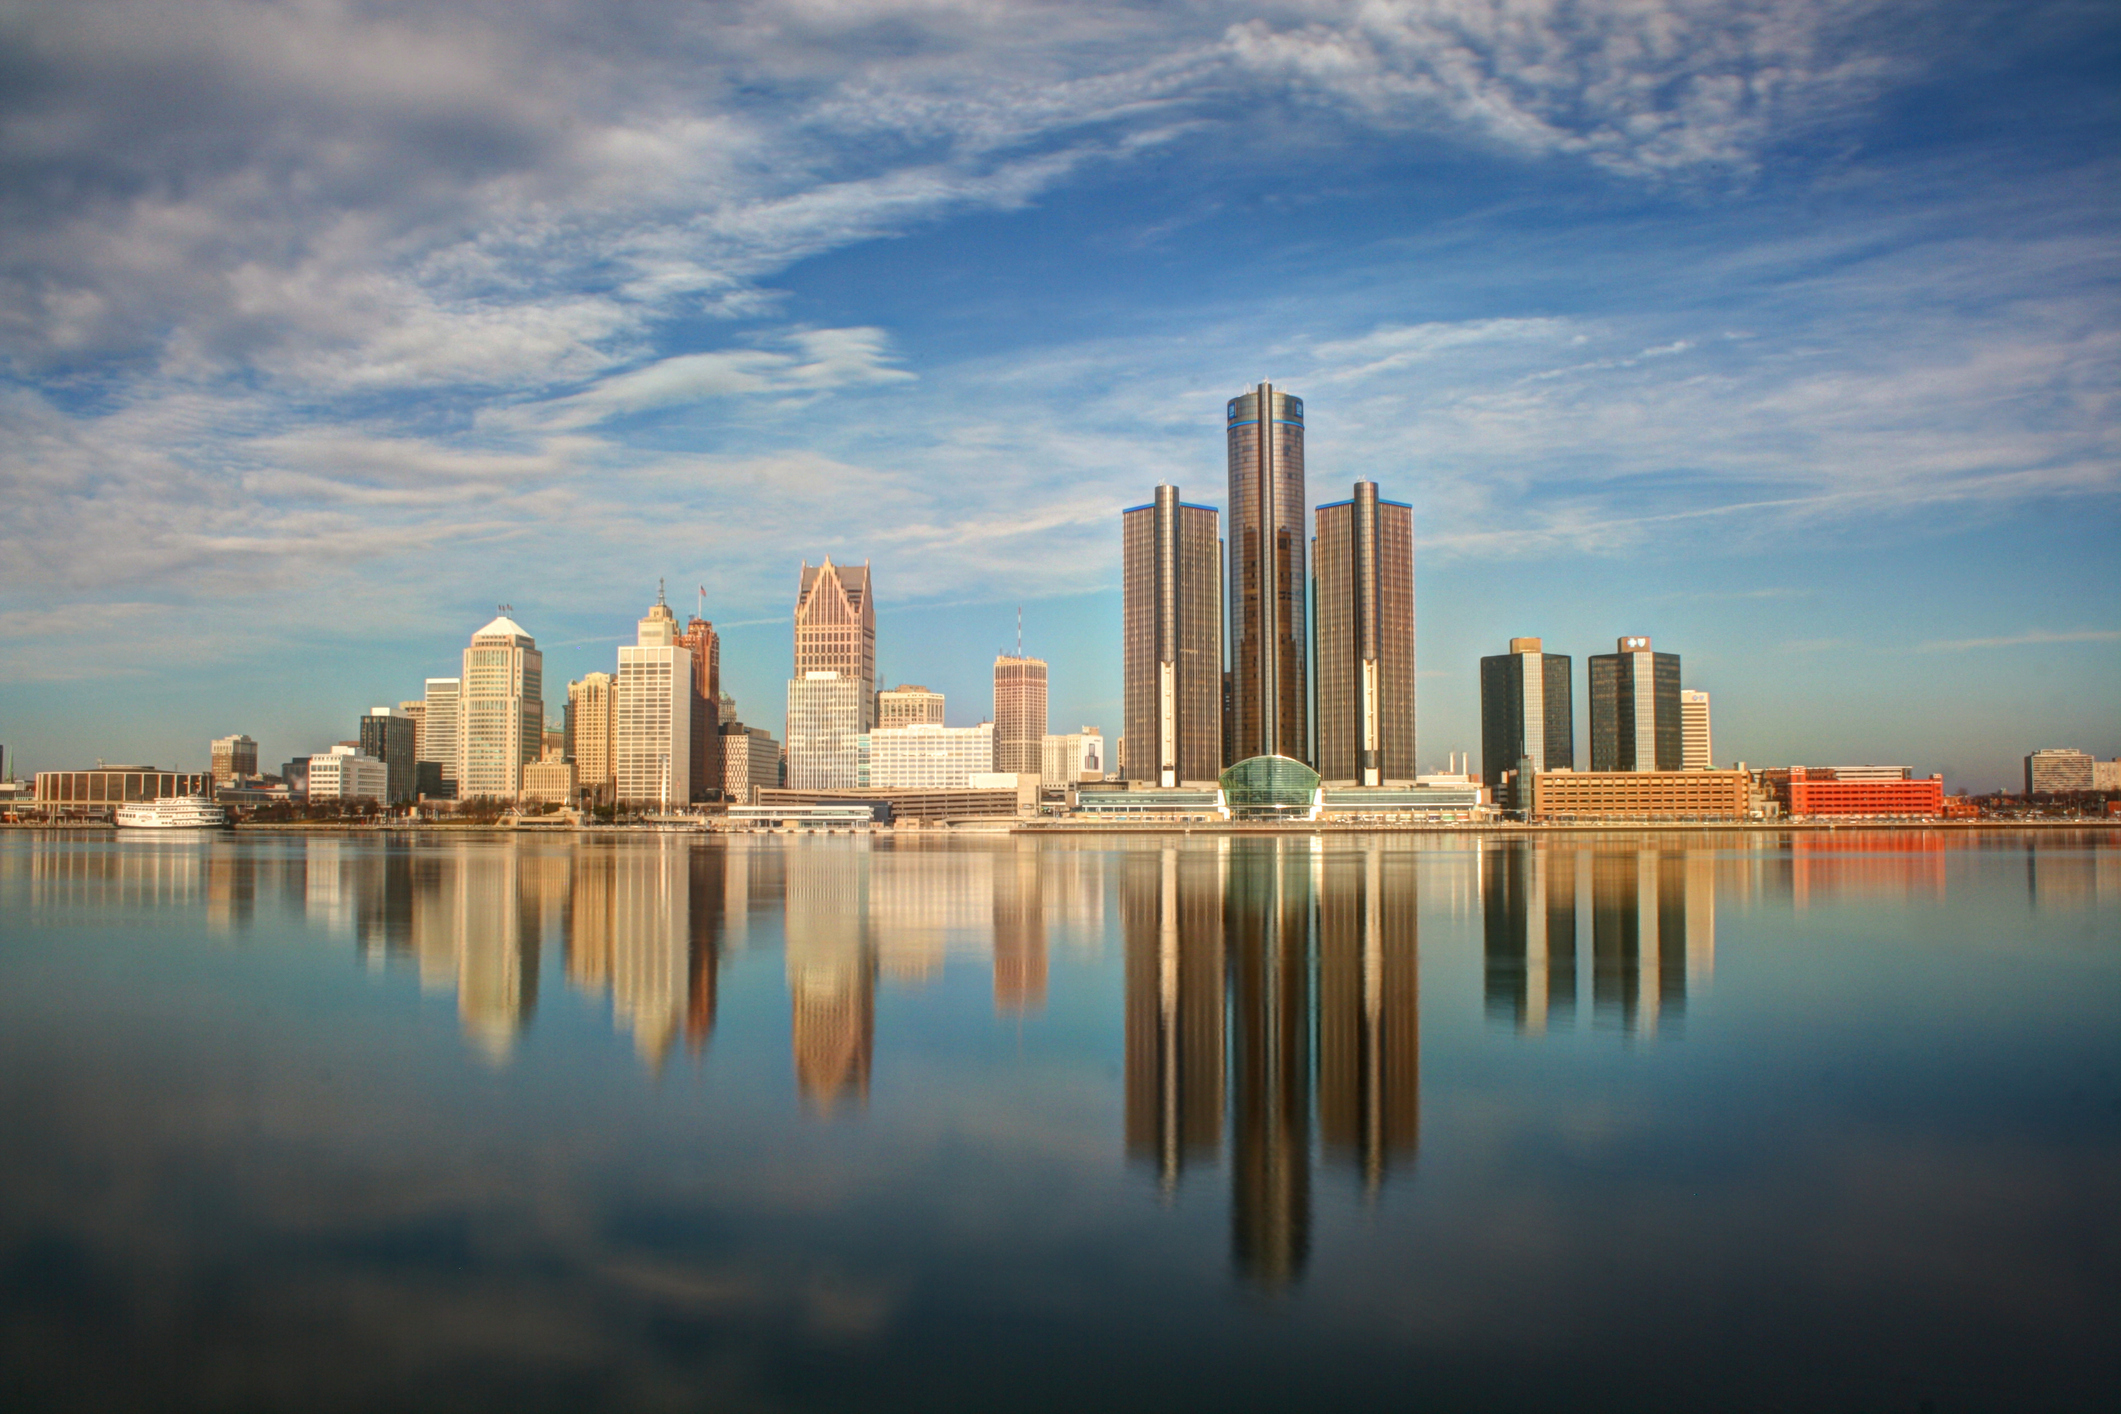 The skyline of Detroit, MI.